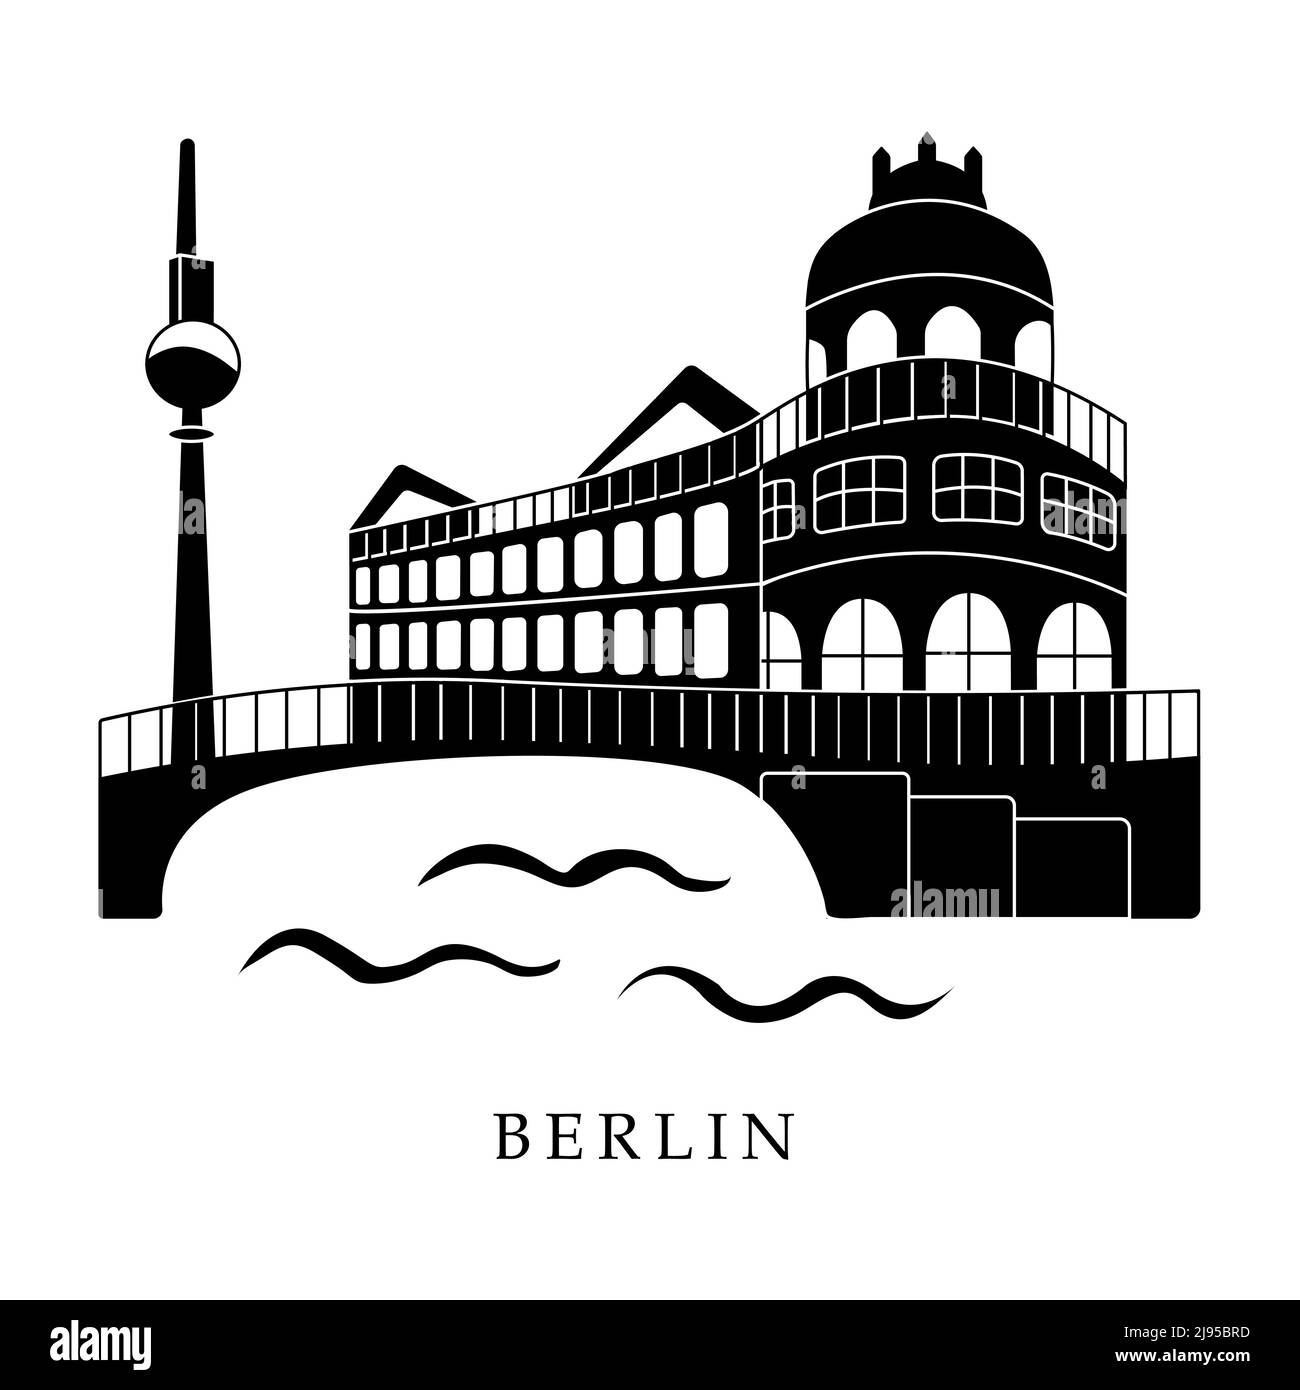 European capitals, Berlin. Black and white illustration Stock Vector